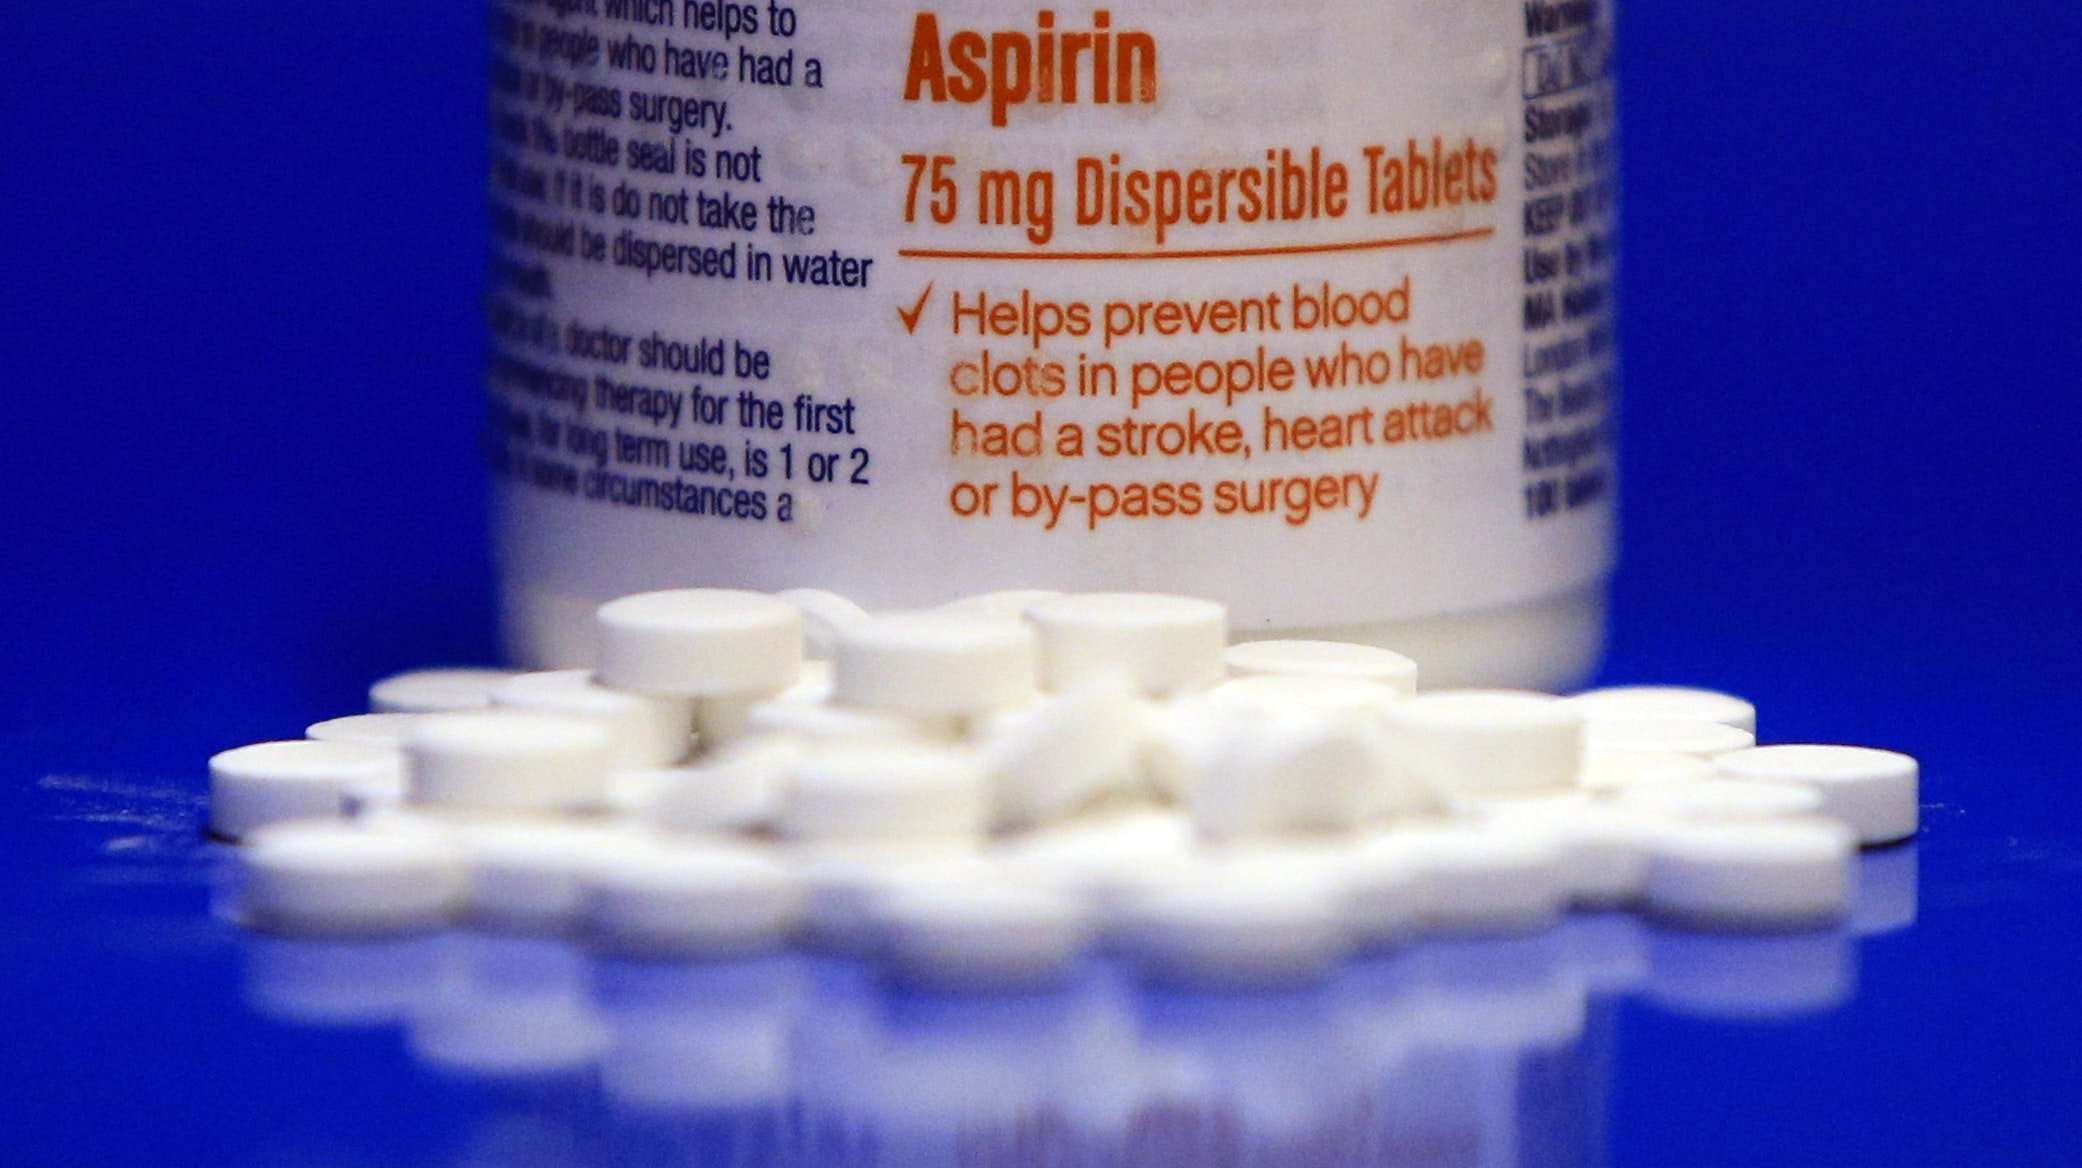 Taking aspirin to prevent heart attacks: worth the risk?